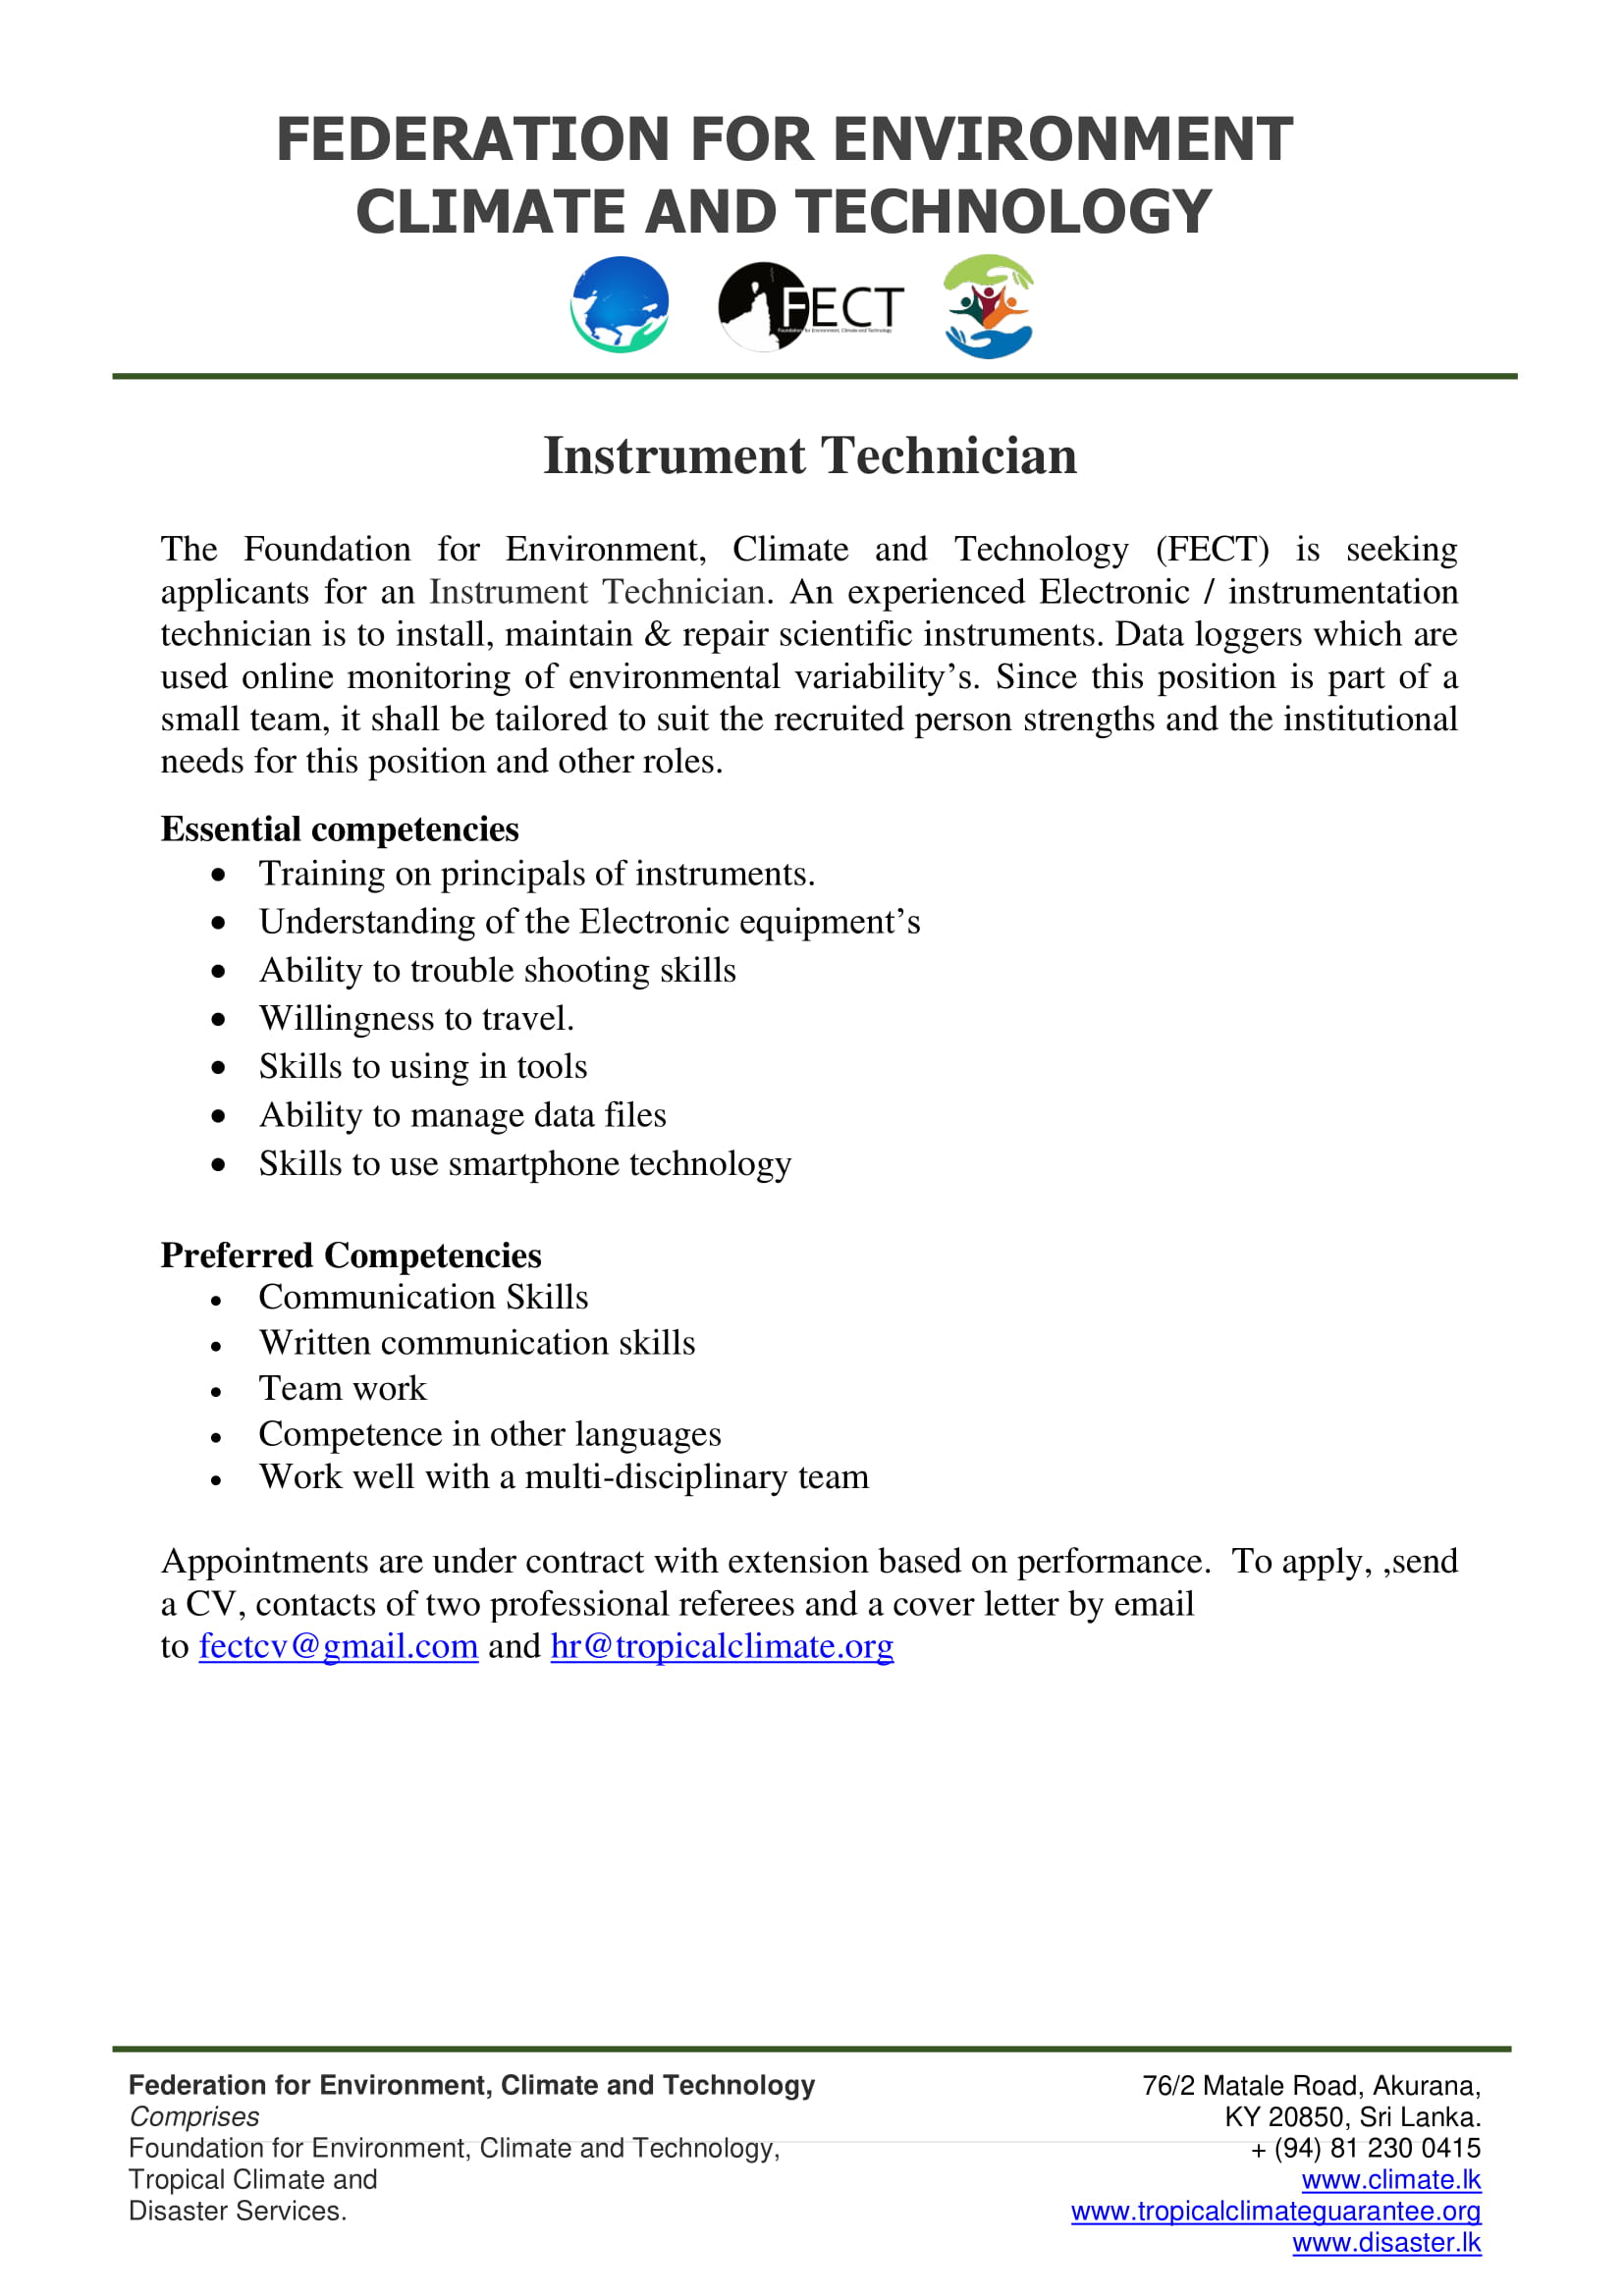  Vacancies are open for Instrument Techniciant